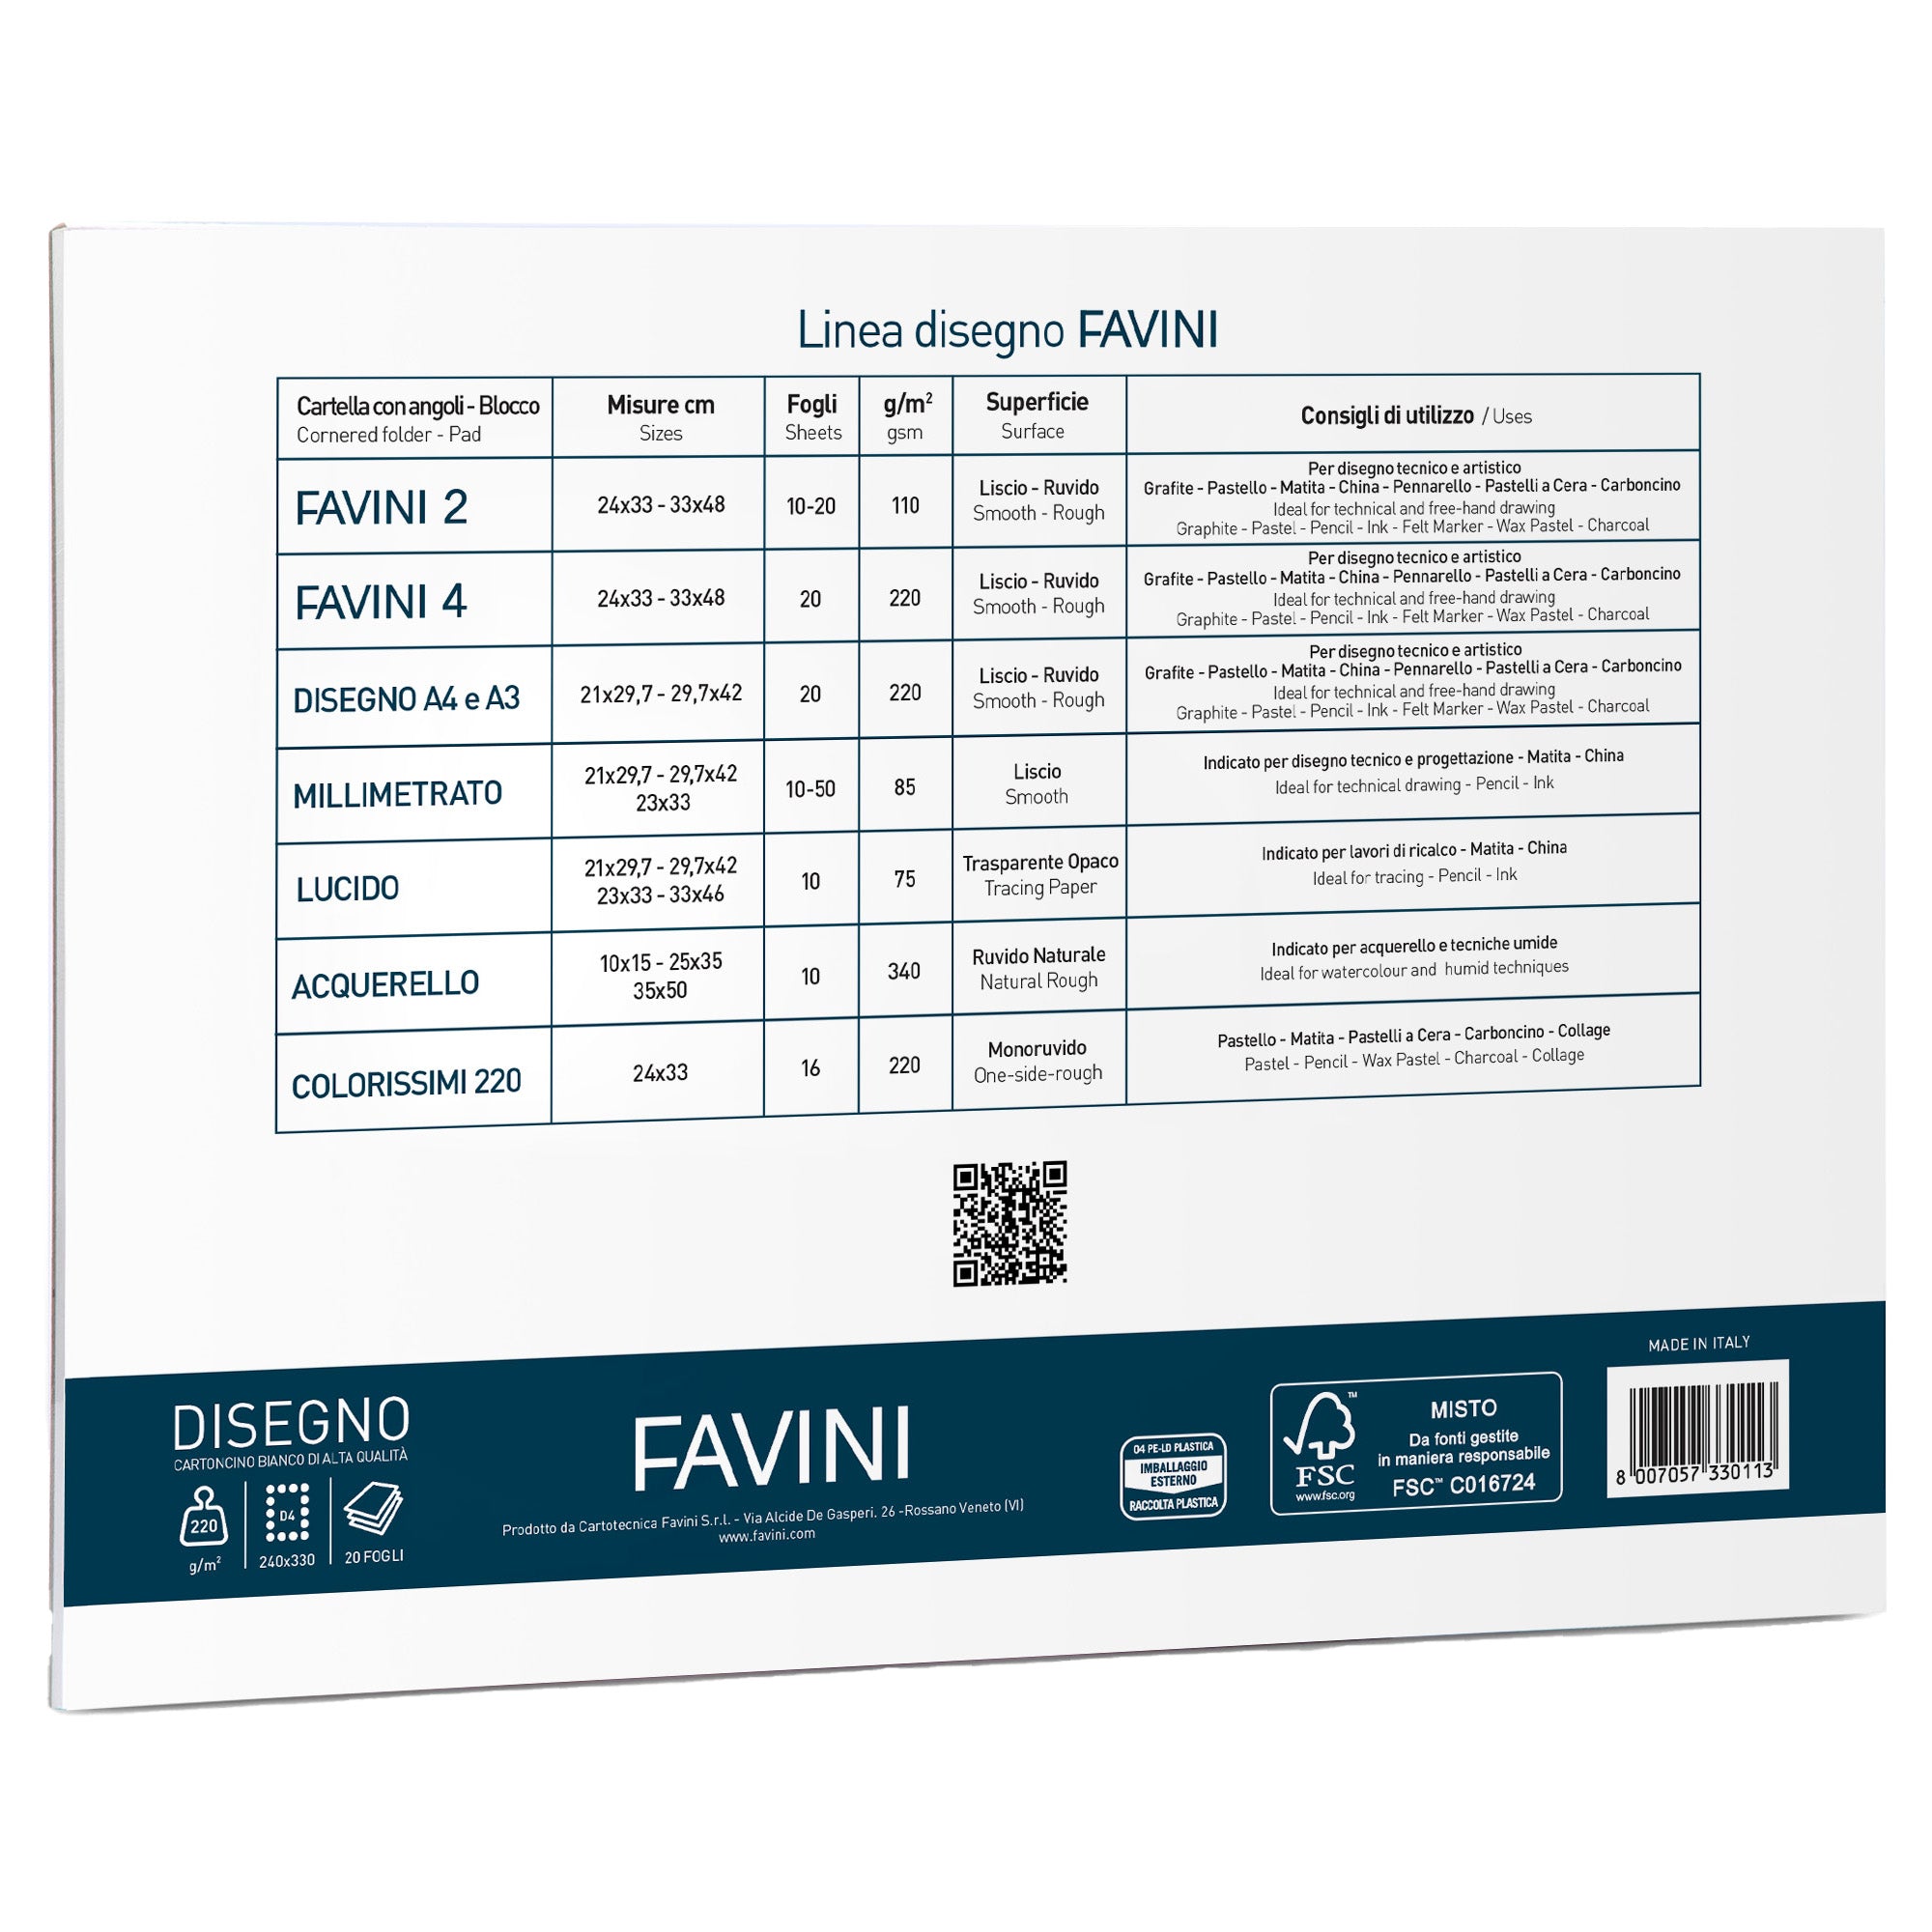 favini-album-4-24x33cm-220gr-20fg-ruvido